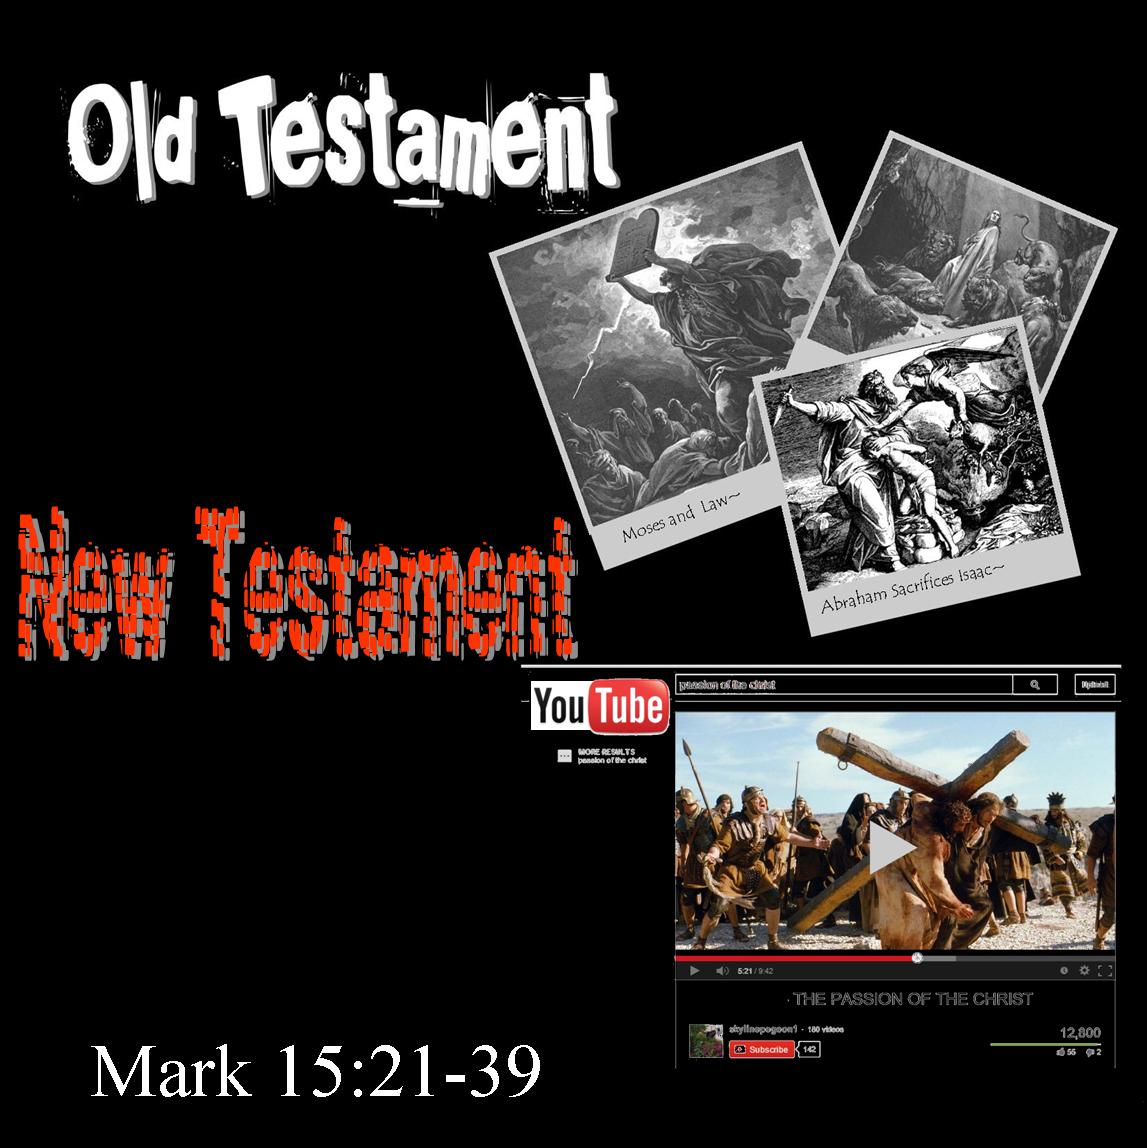 Old Testament Polaroids, New Testament YouTube - Mark 15:21-39